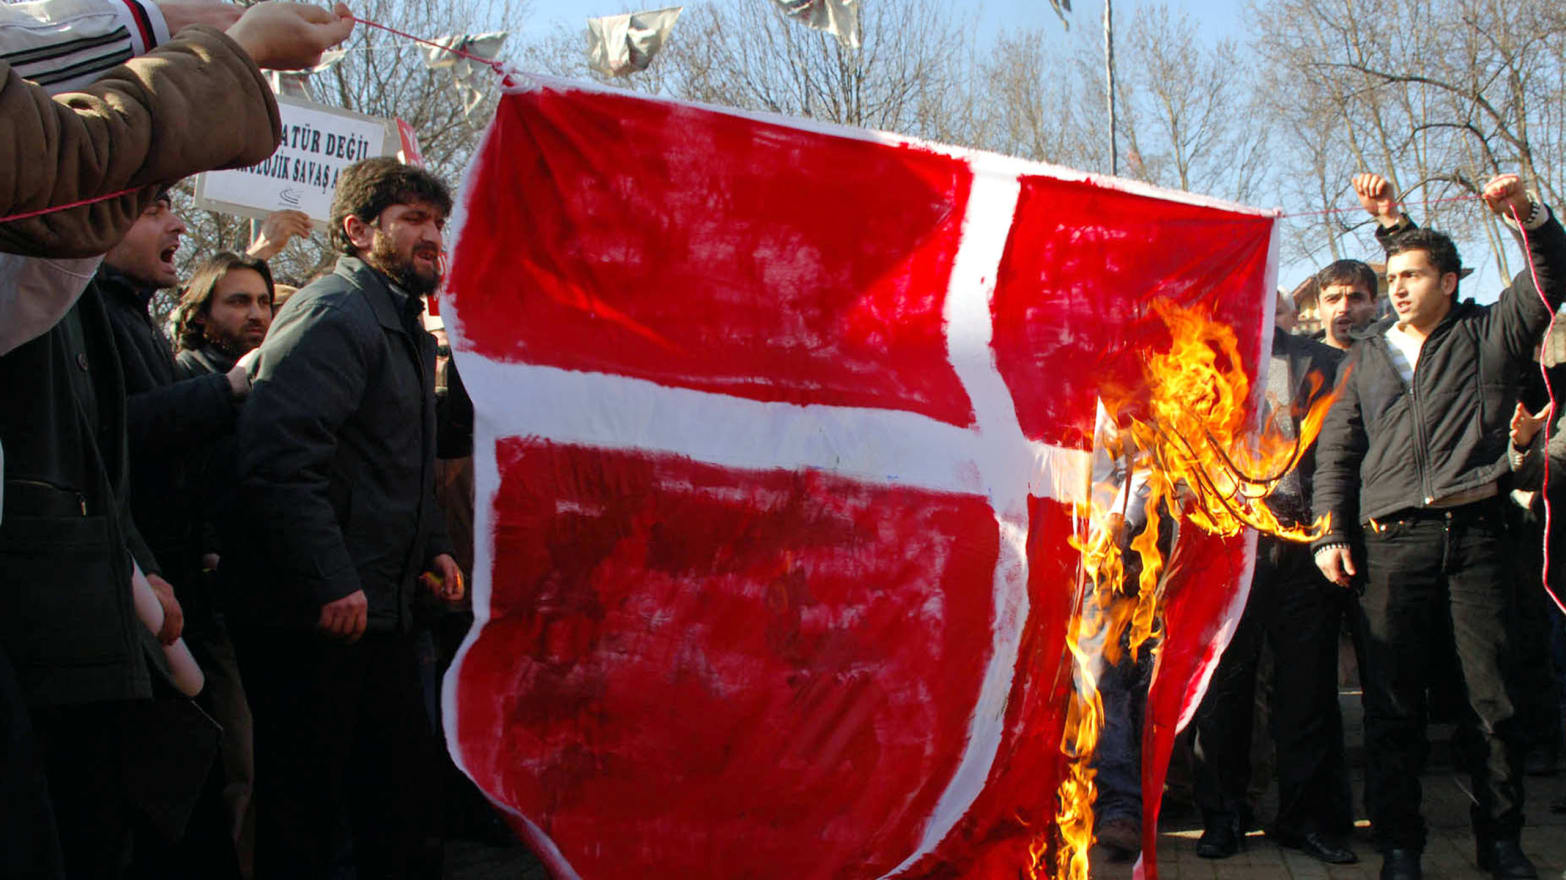 Ahmed Akkari Repents Violent Opposition to Danish Cartoons Lampooning Islam